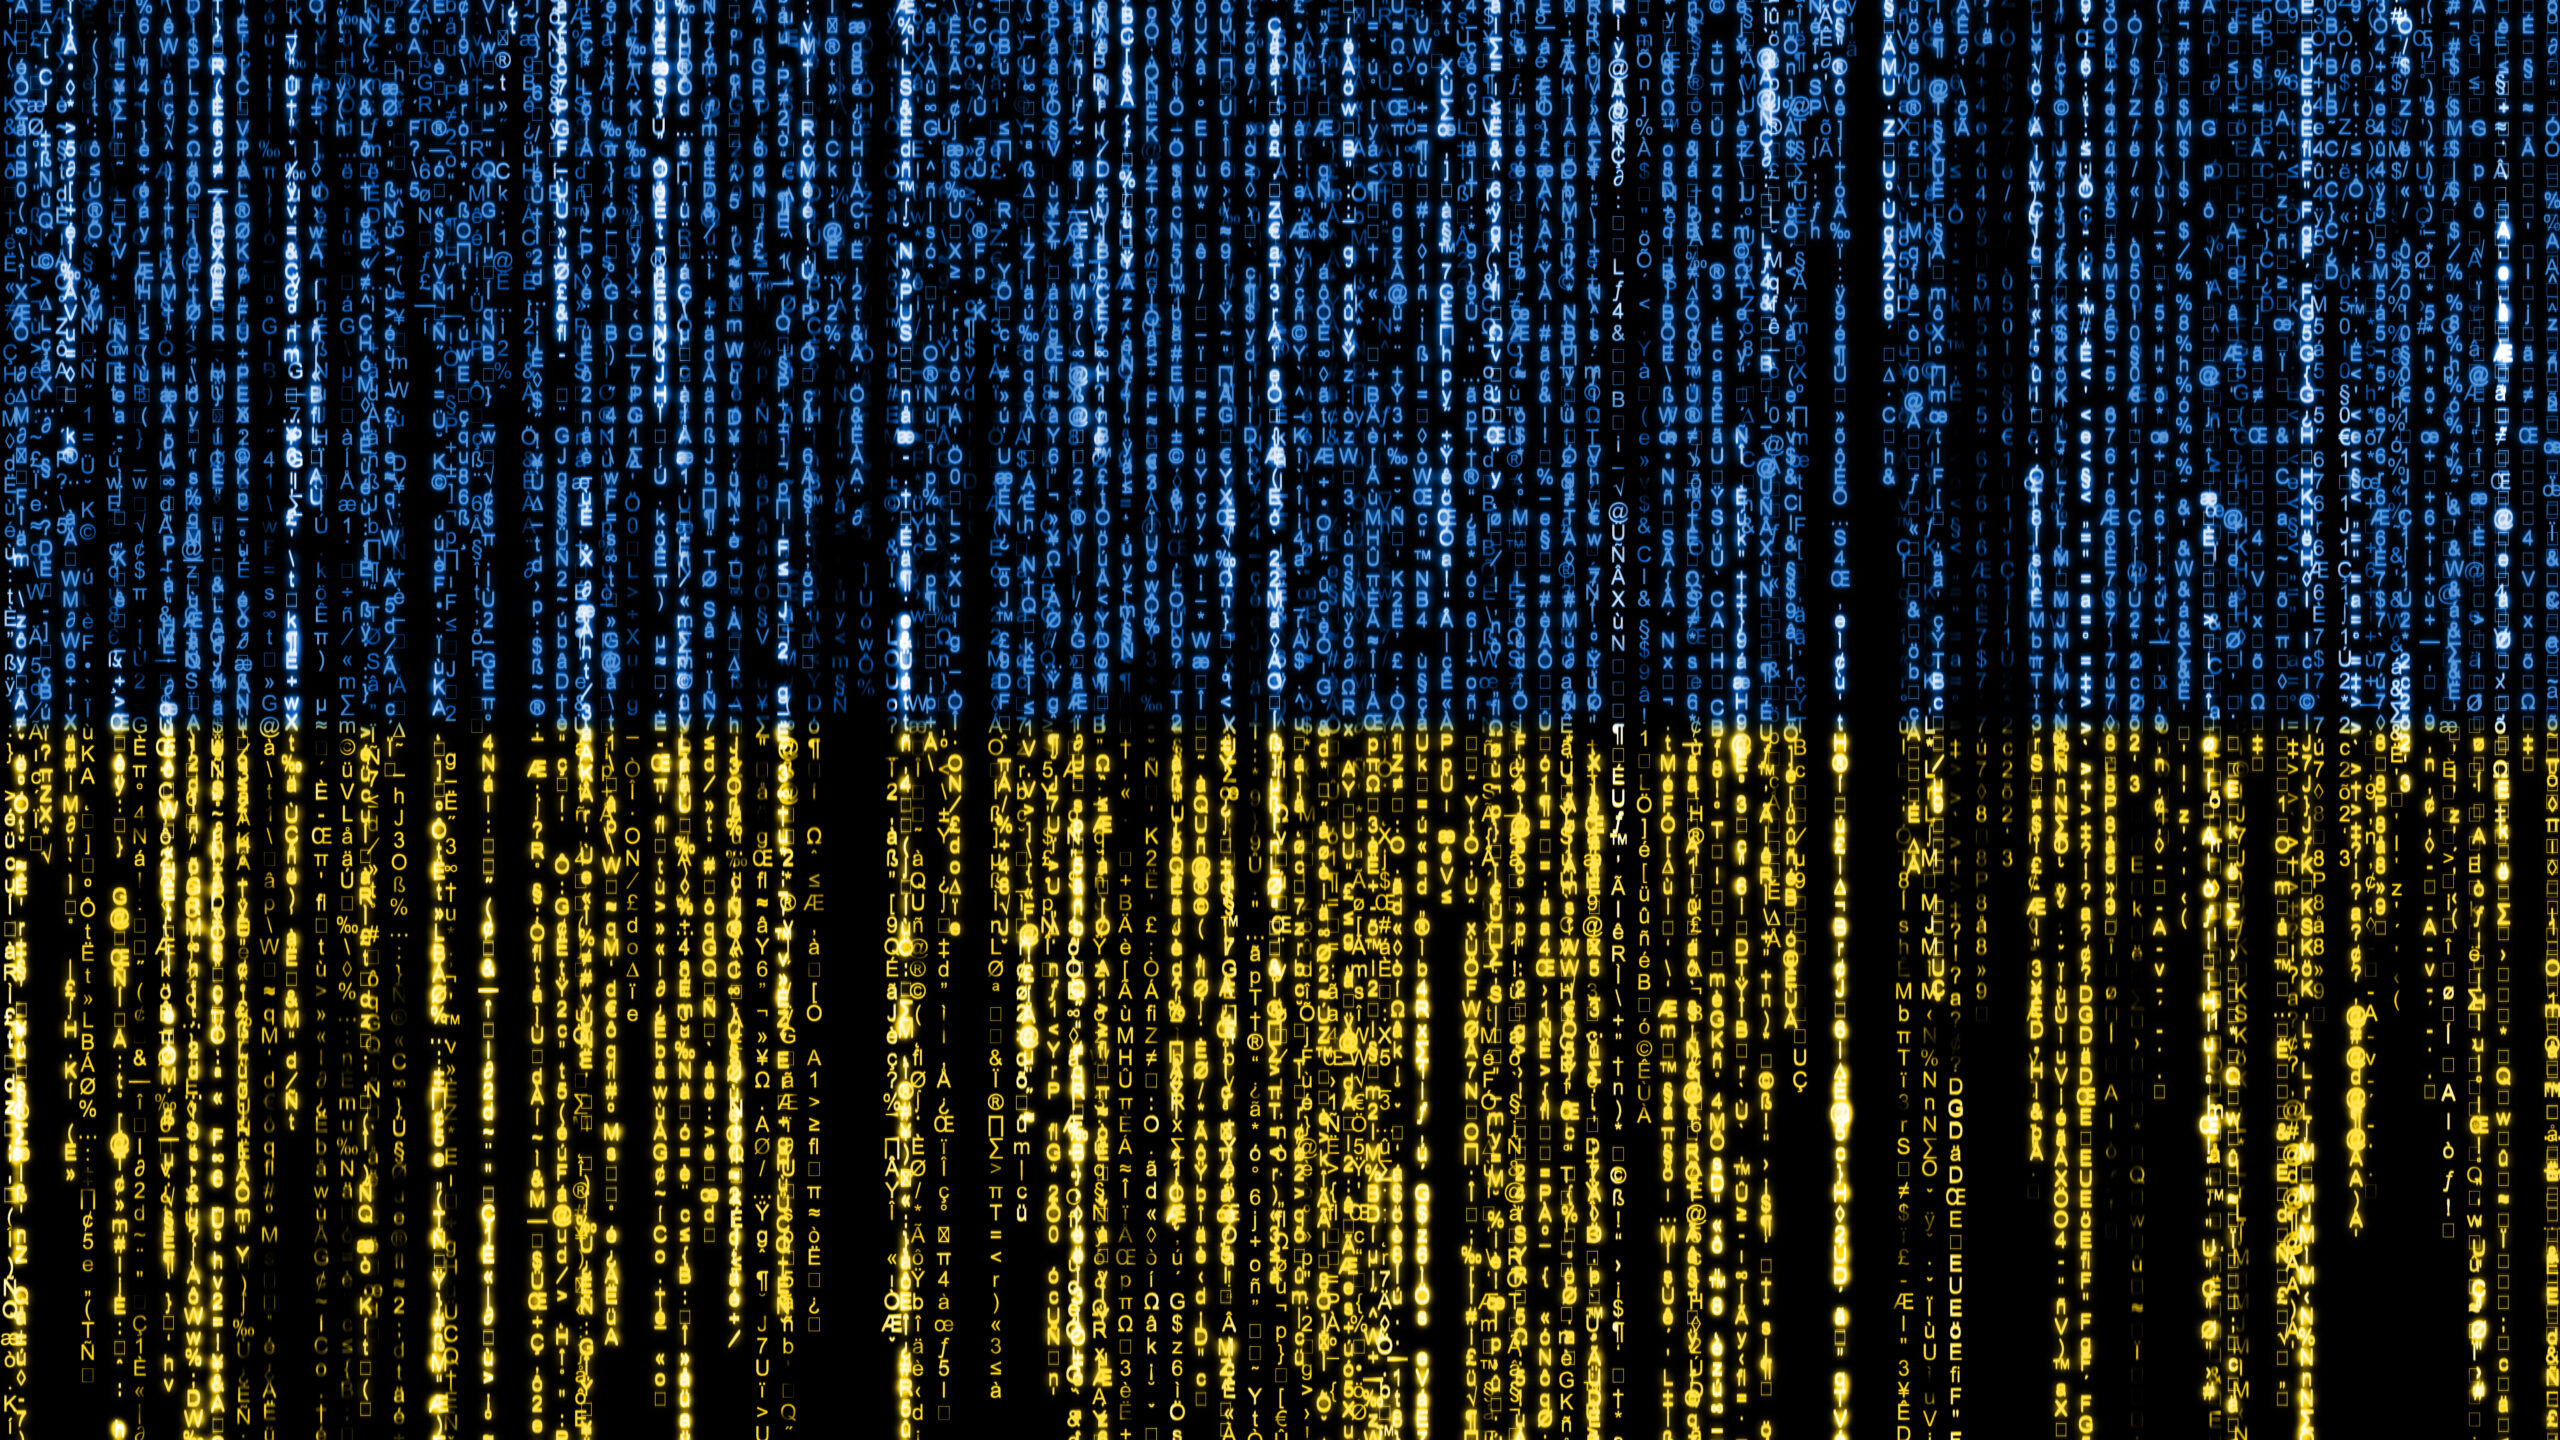 Hacked by Ukraine